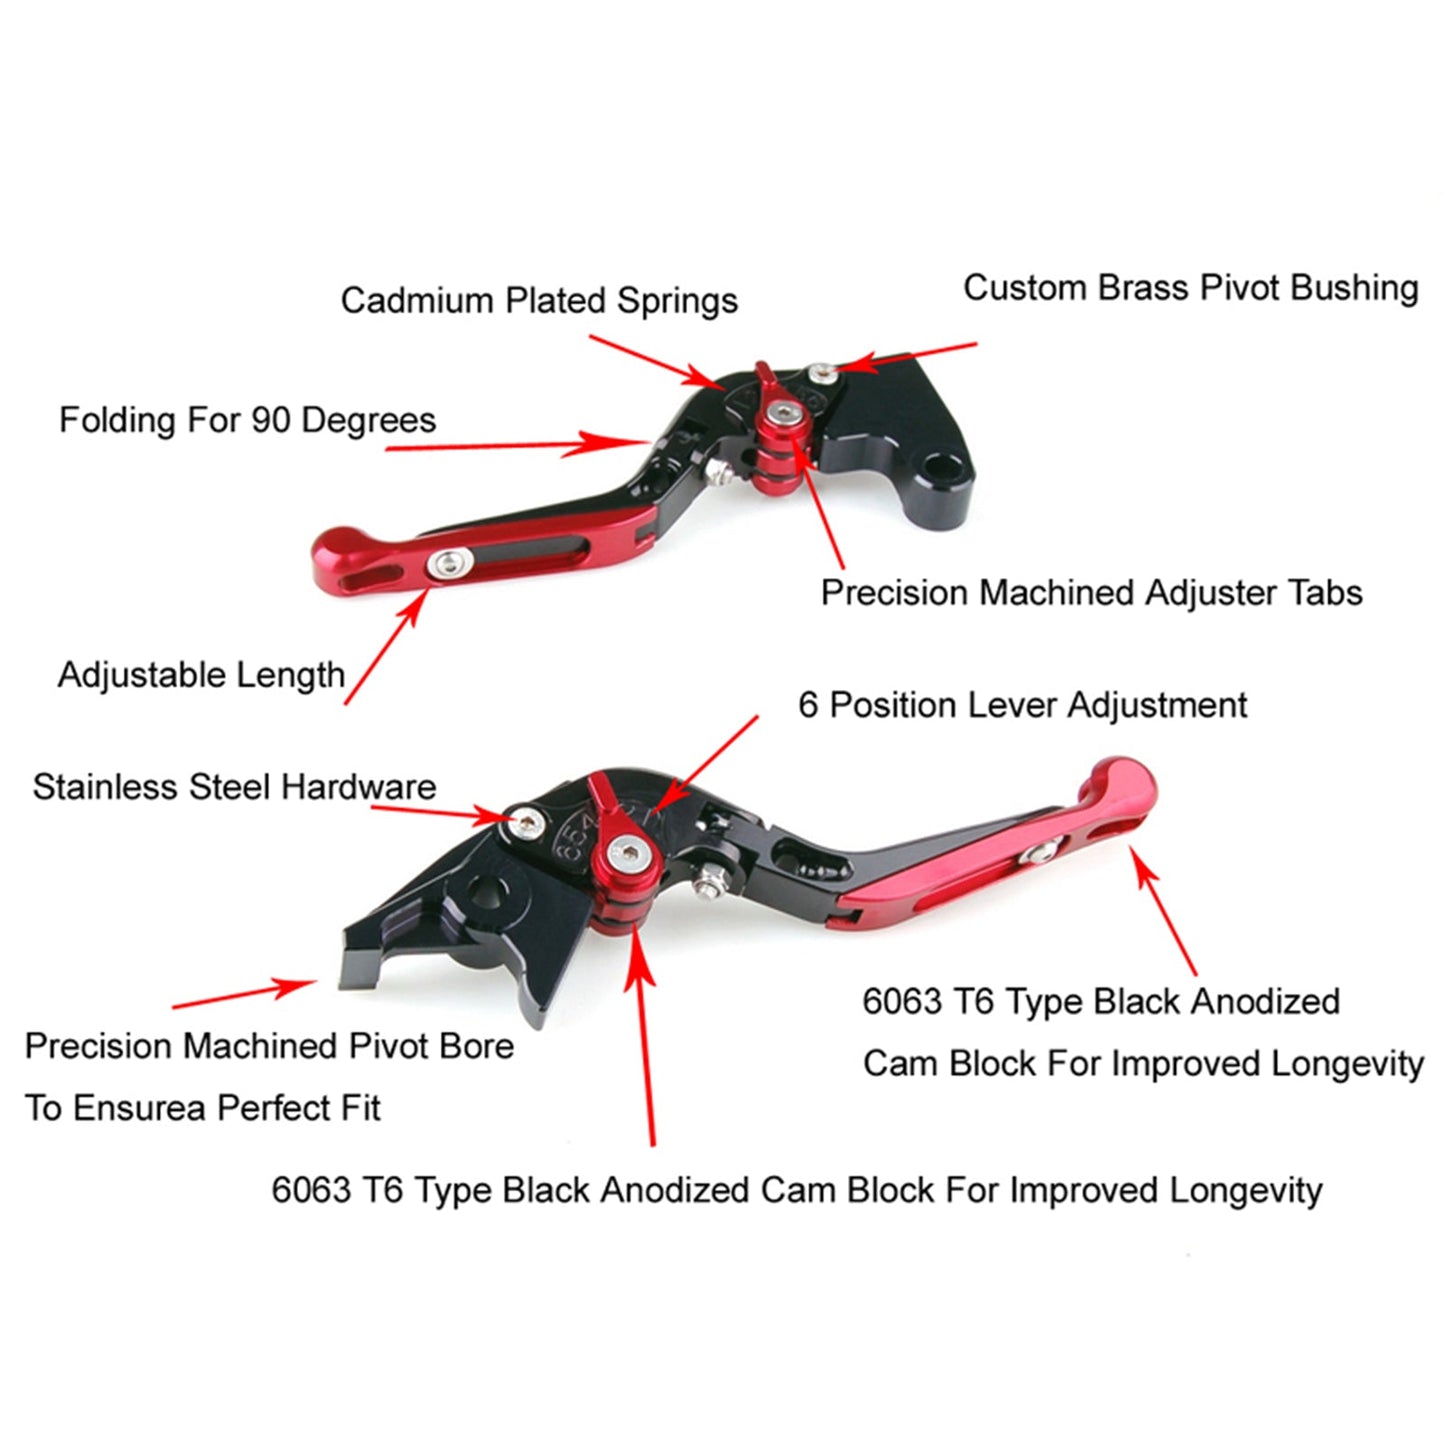 Adjustable Clutch Brake Lever for Honda CBR500R/CB500F 19-21 CBR300R 19-21